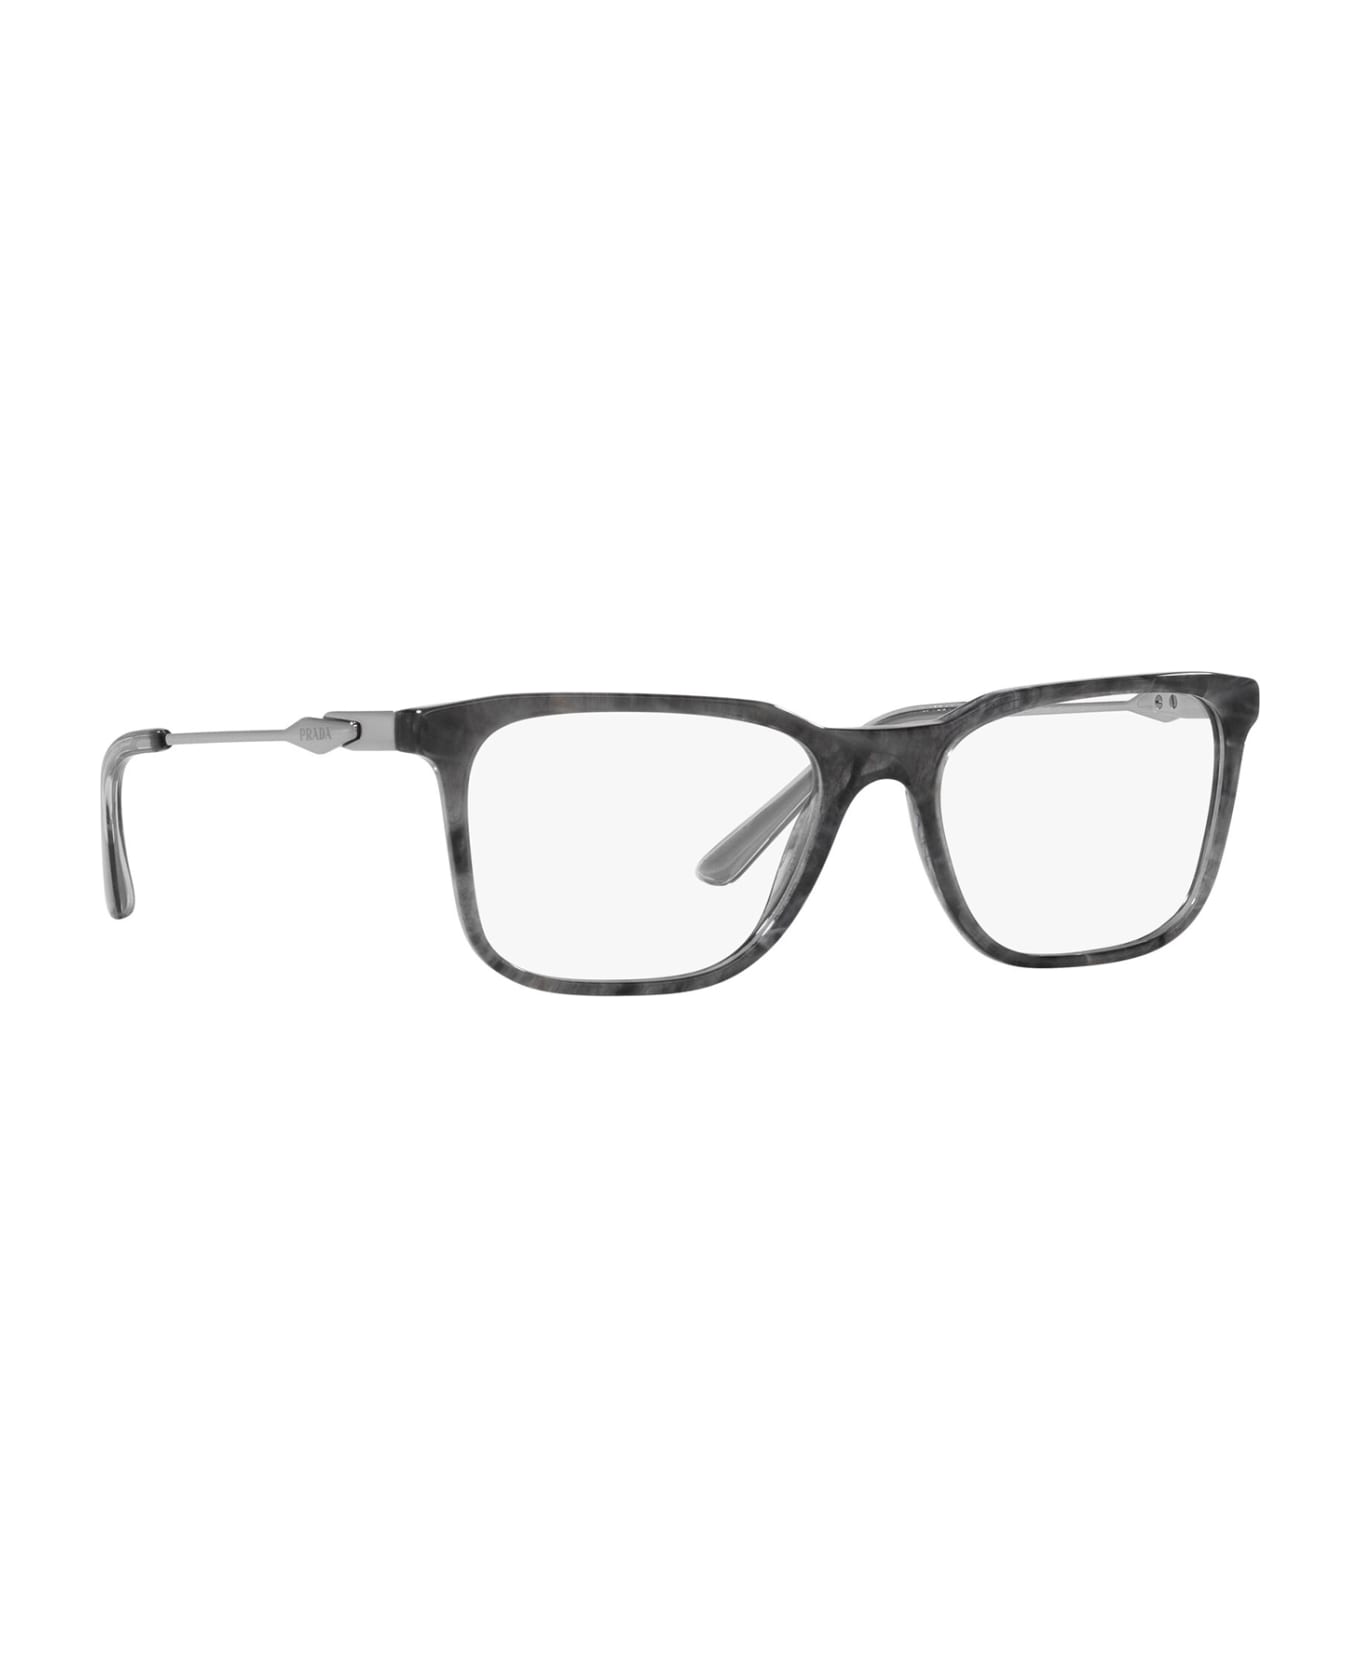 Prada Eyewear Pr 05zv Graphite Stone Glasses - Graphite Stone